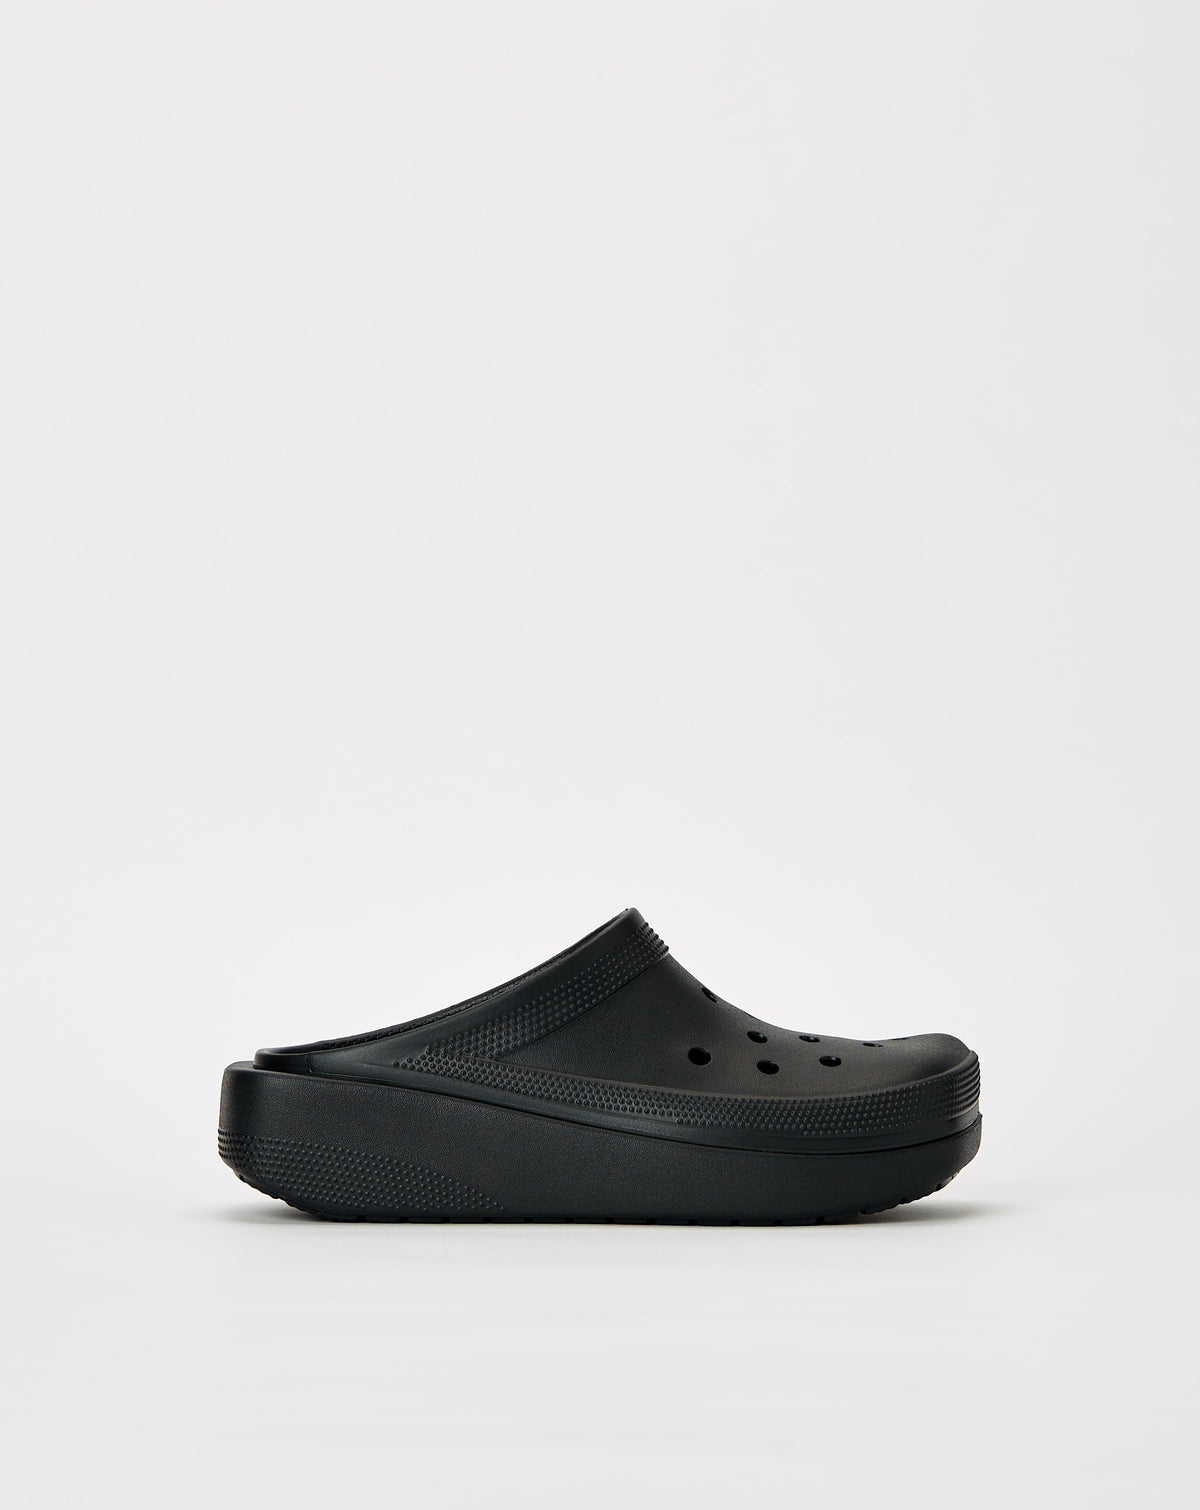 Crocs Classic Blunt Toe - Rule of Next Footwear